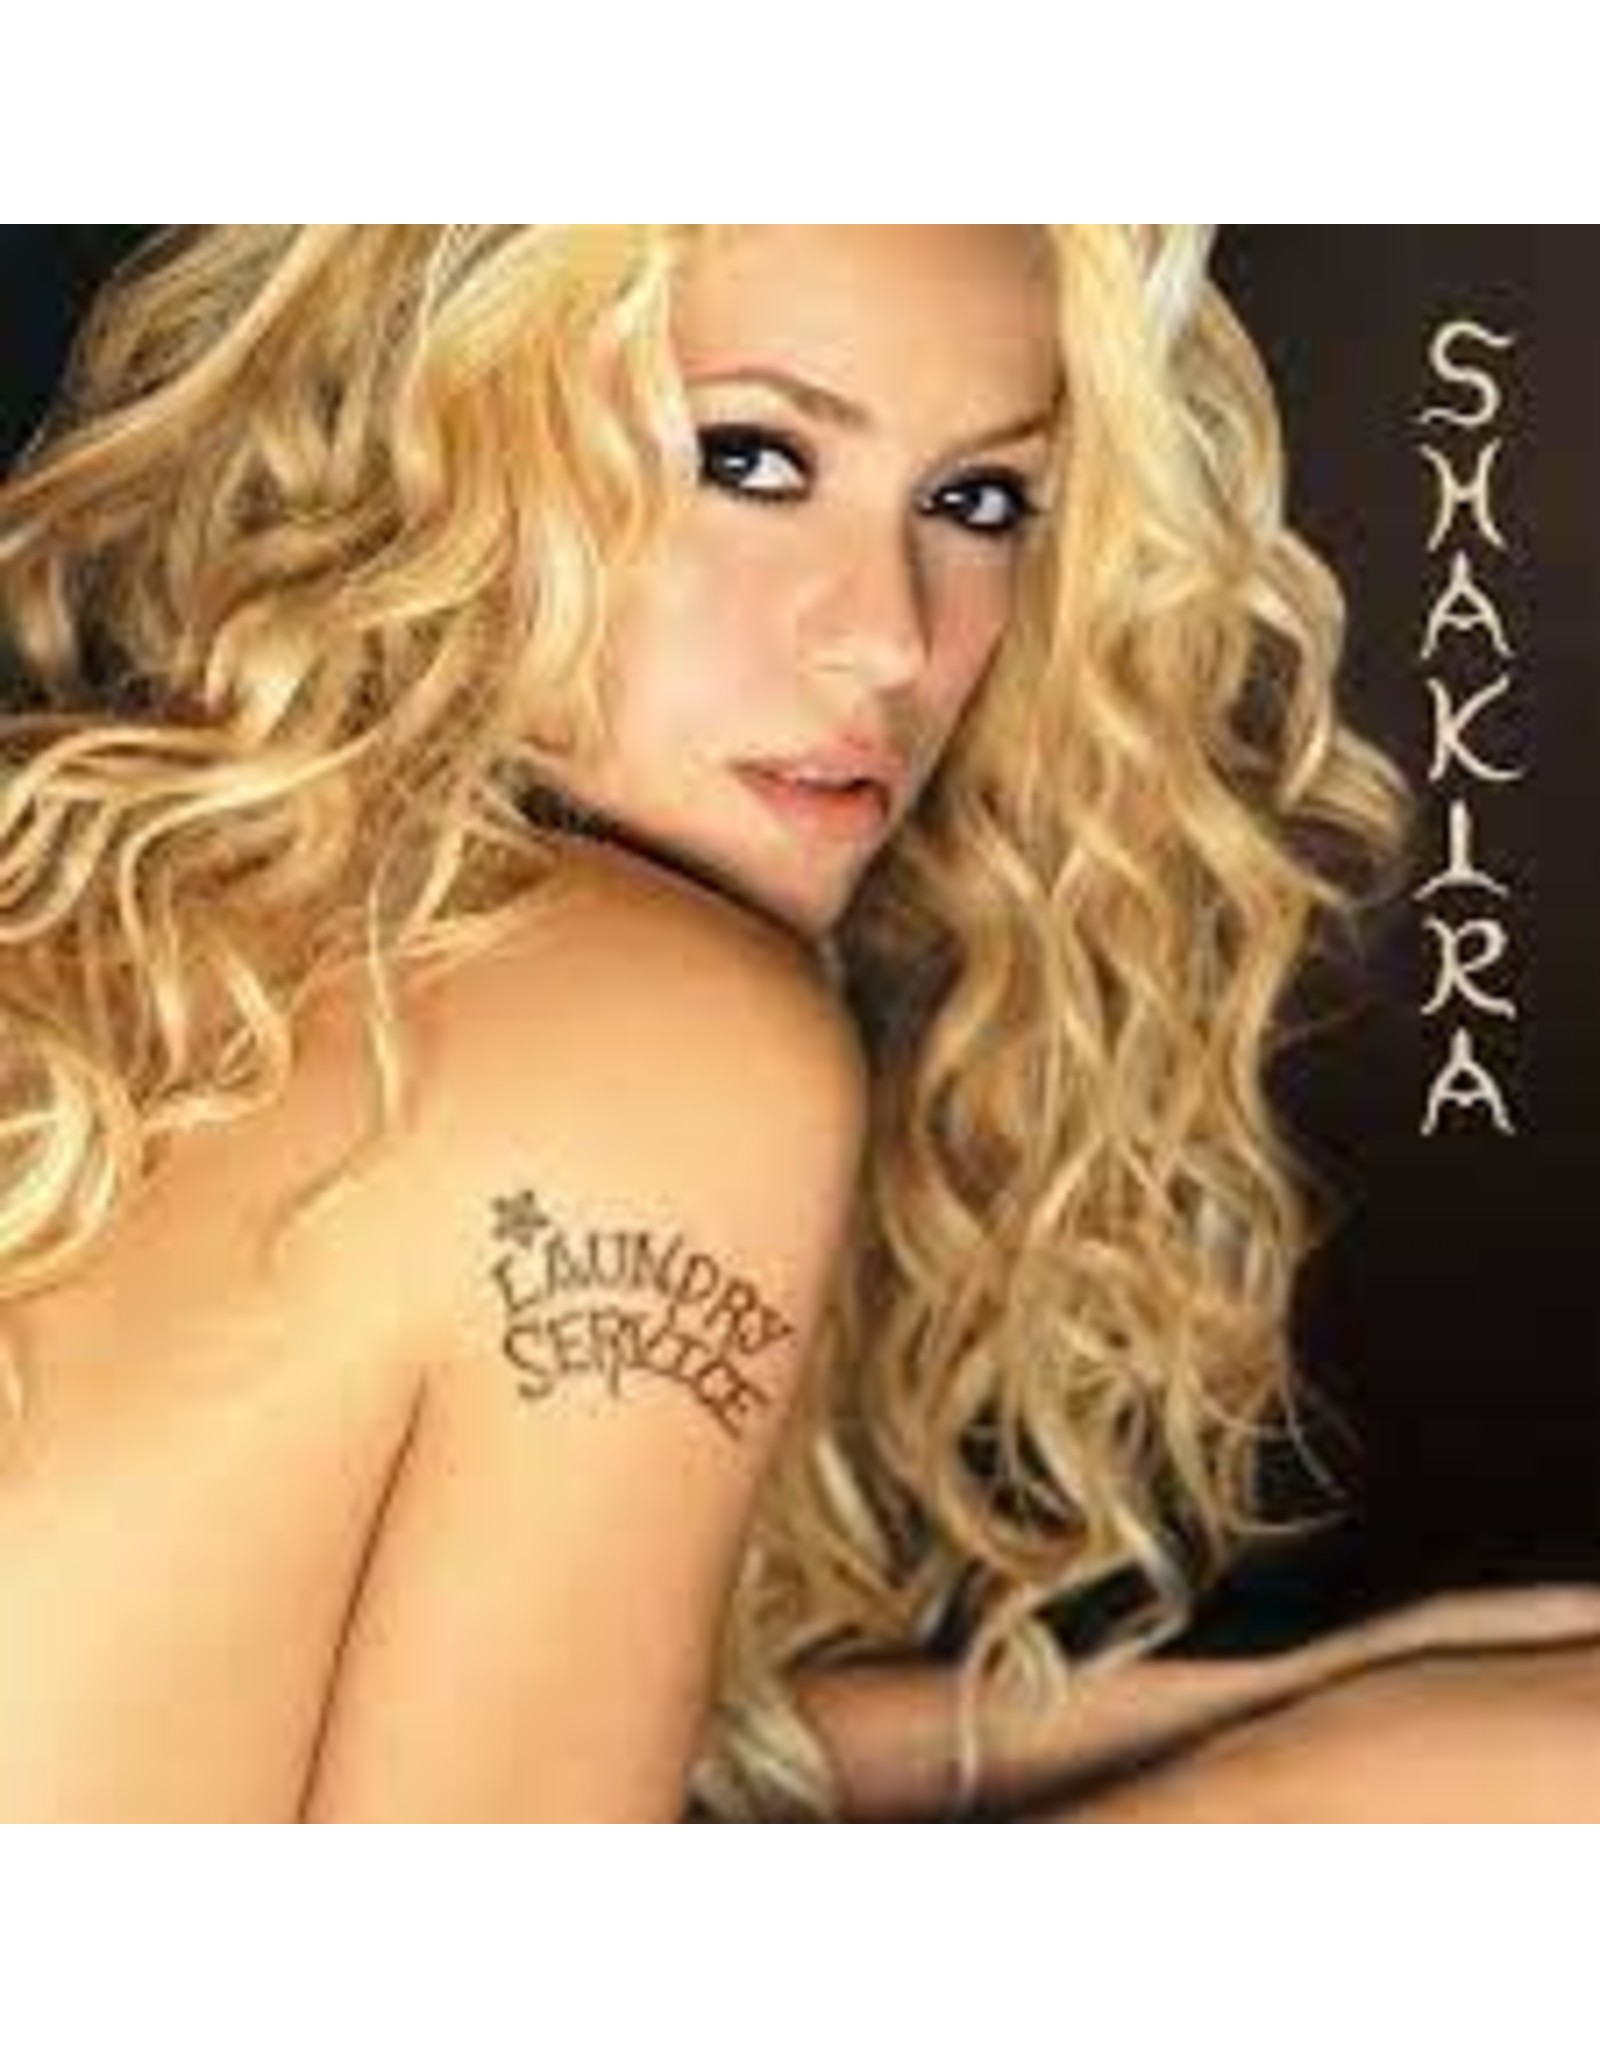 Shakira - Laundry Service (20th Anniversary) [Yellow Vinyl]